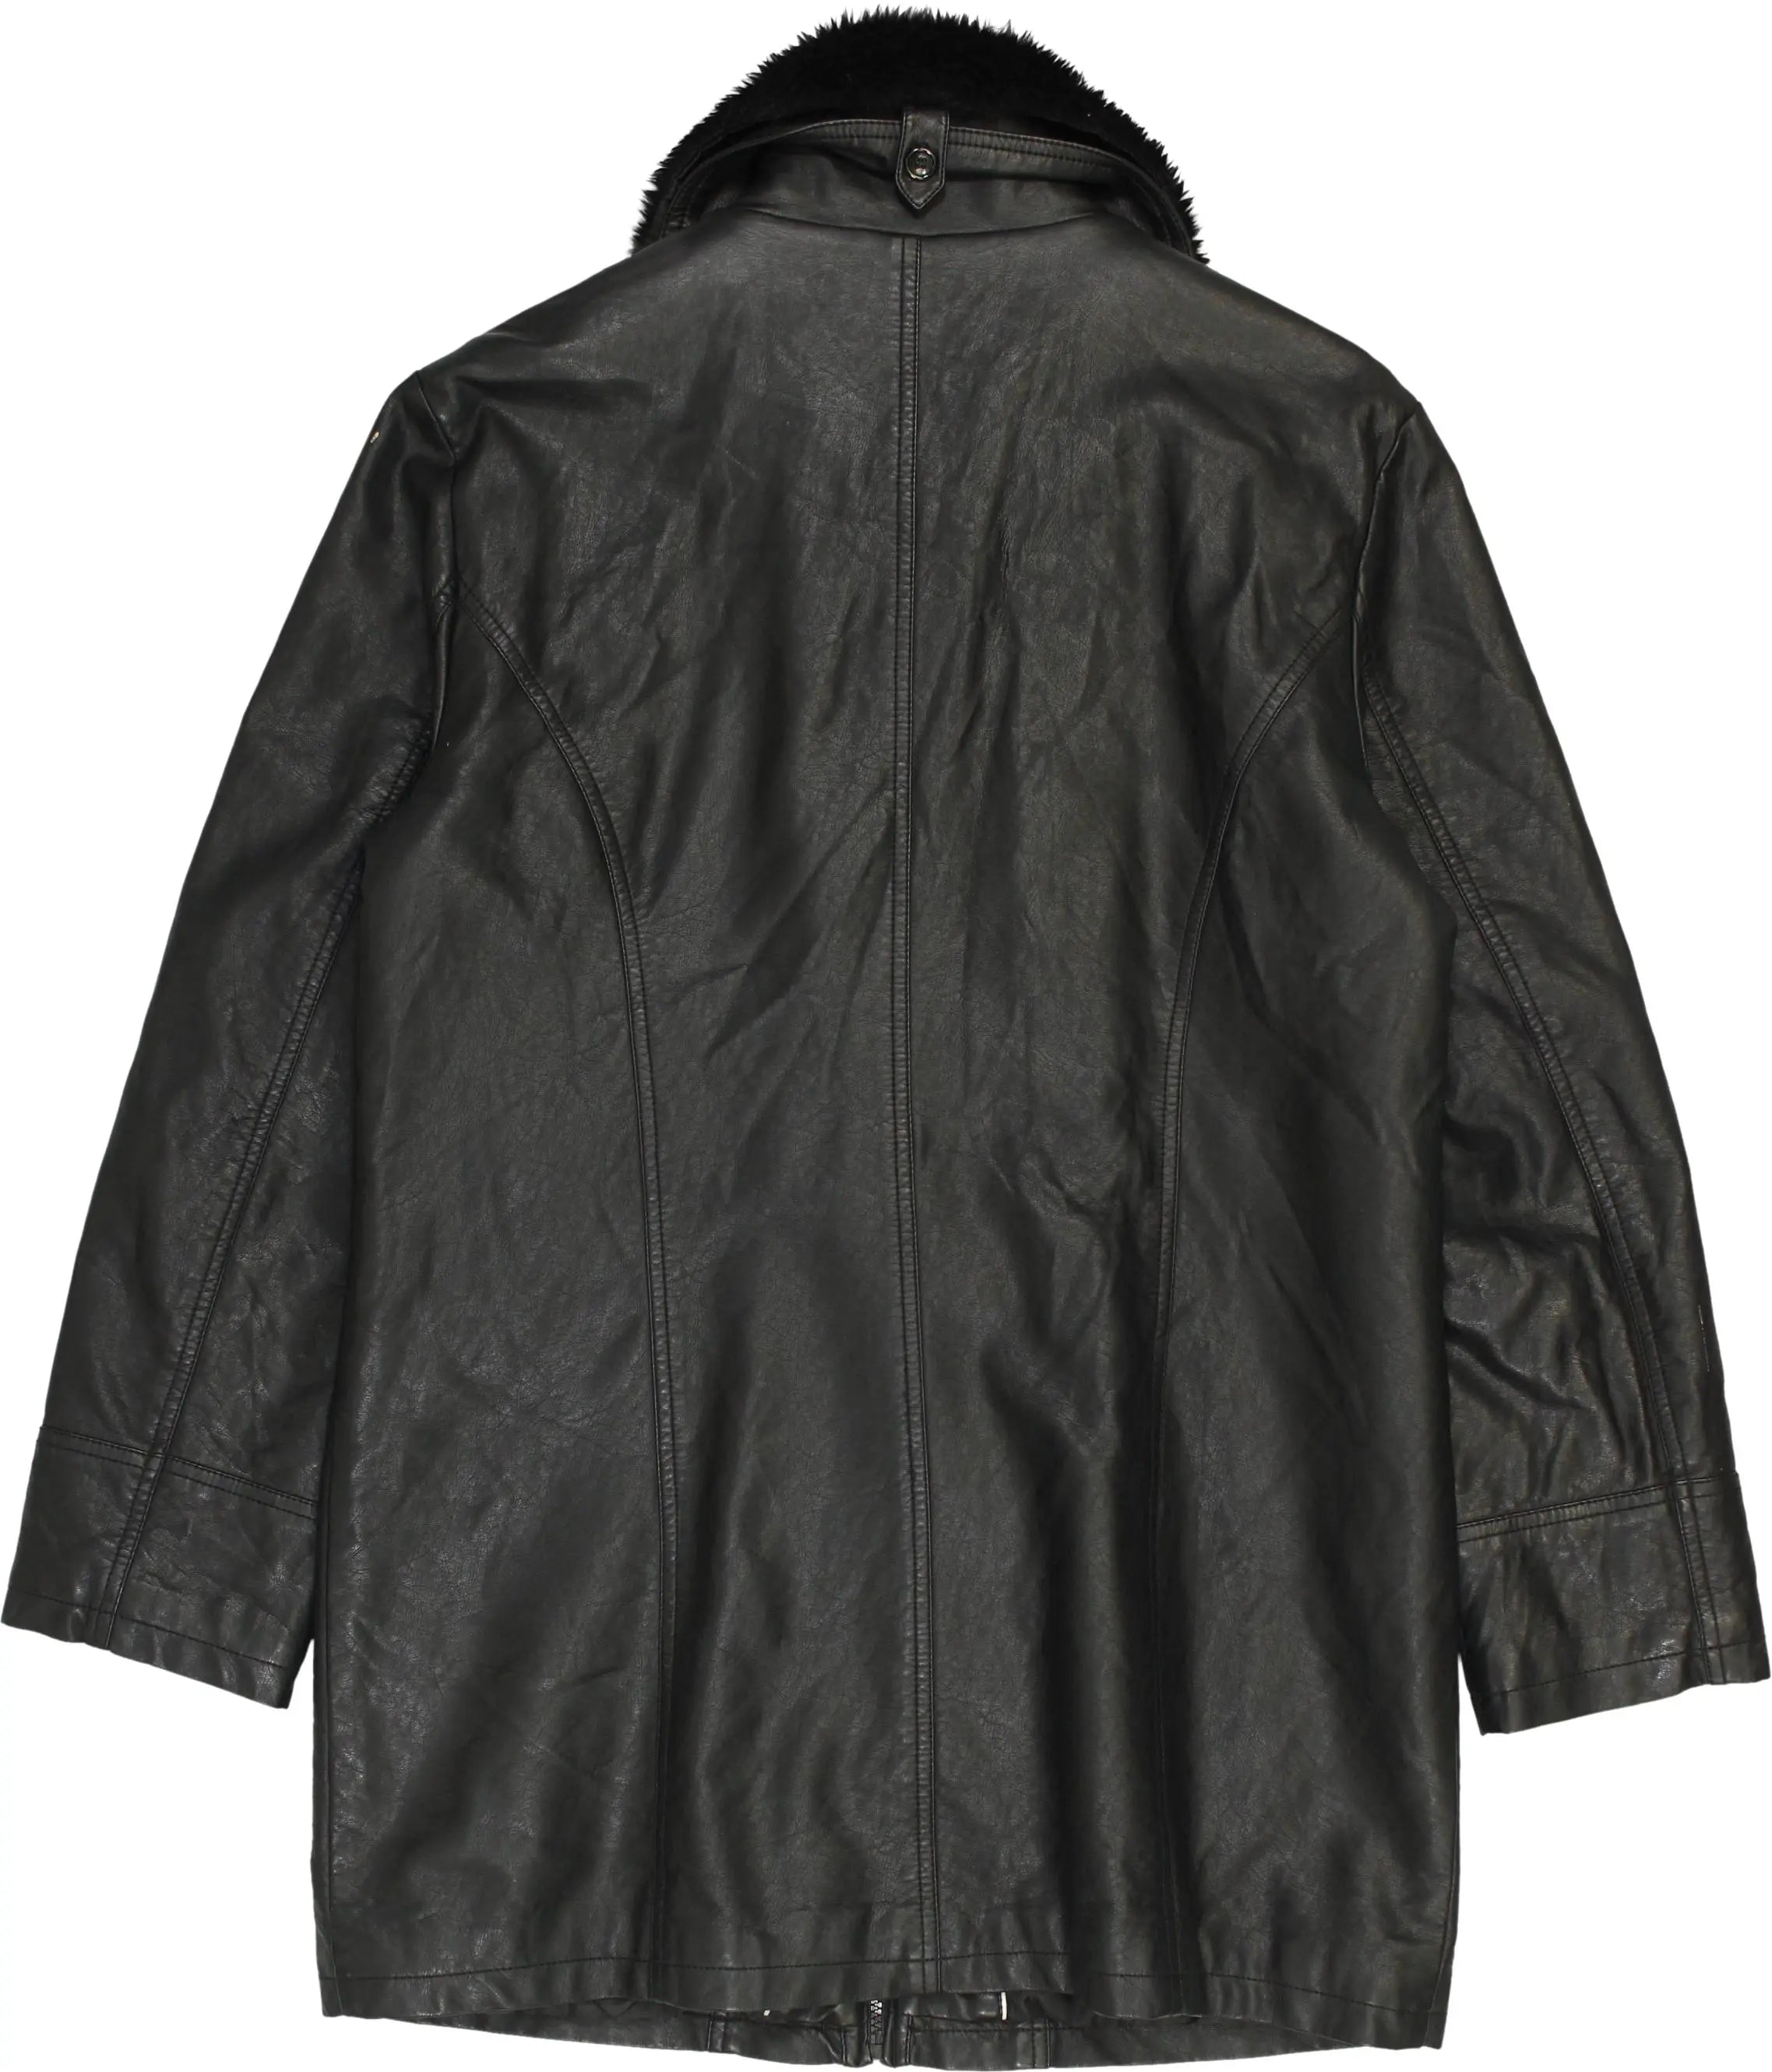 Mainpol - Vegan Leather Jacket- ThriftTale.com - Vintage and second handclothing